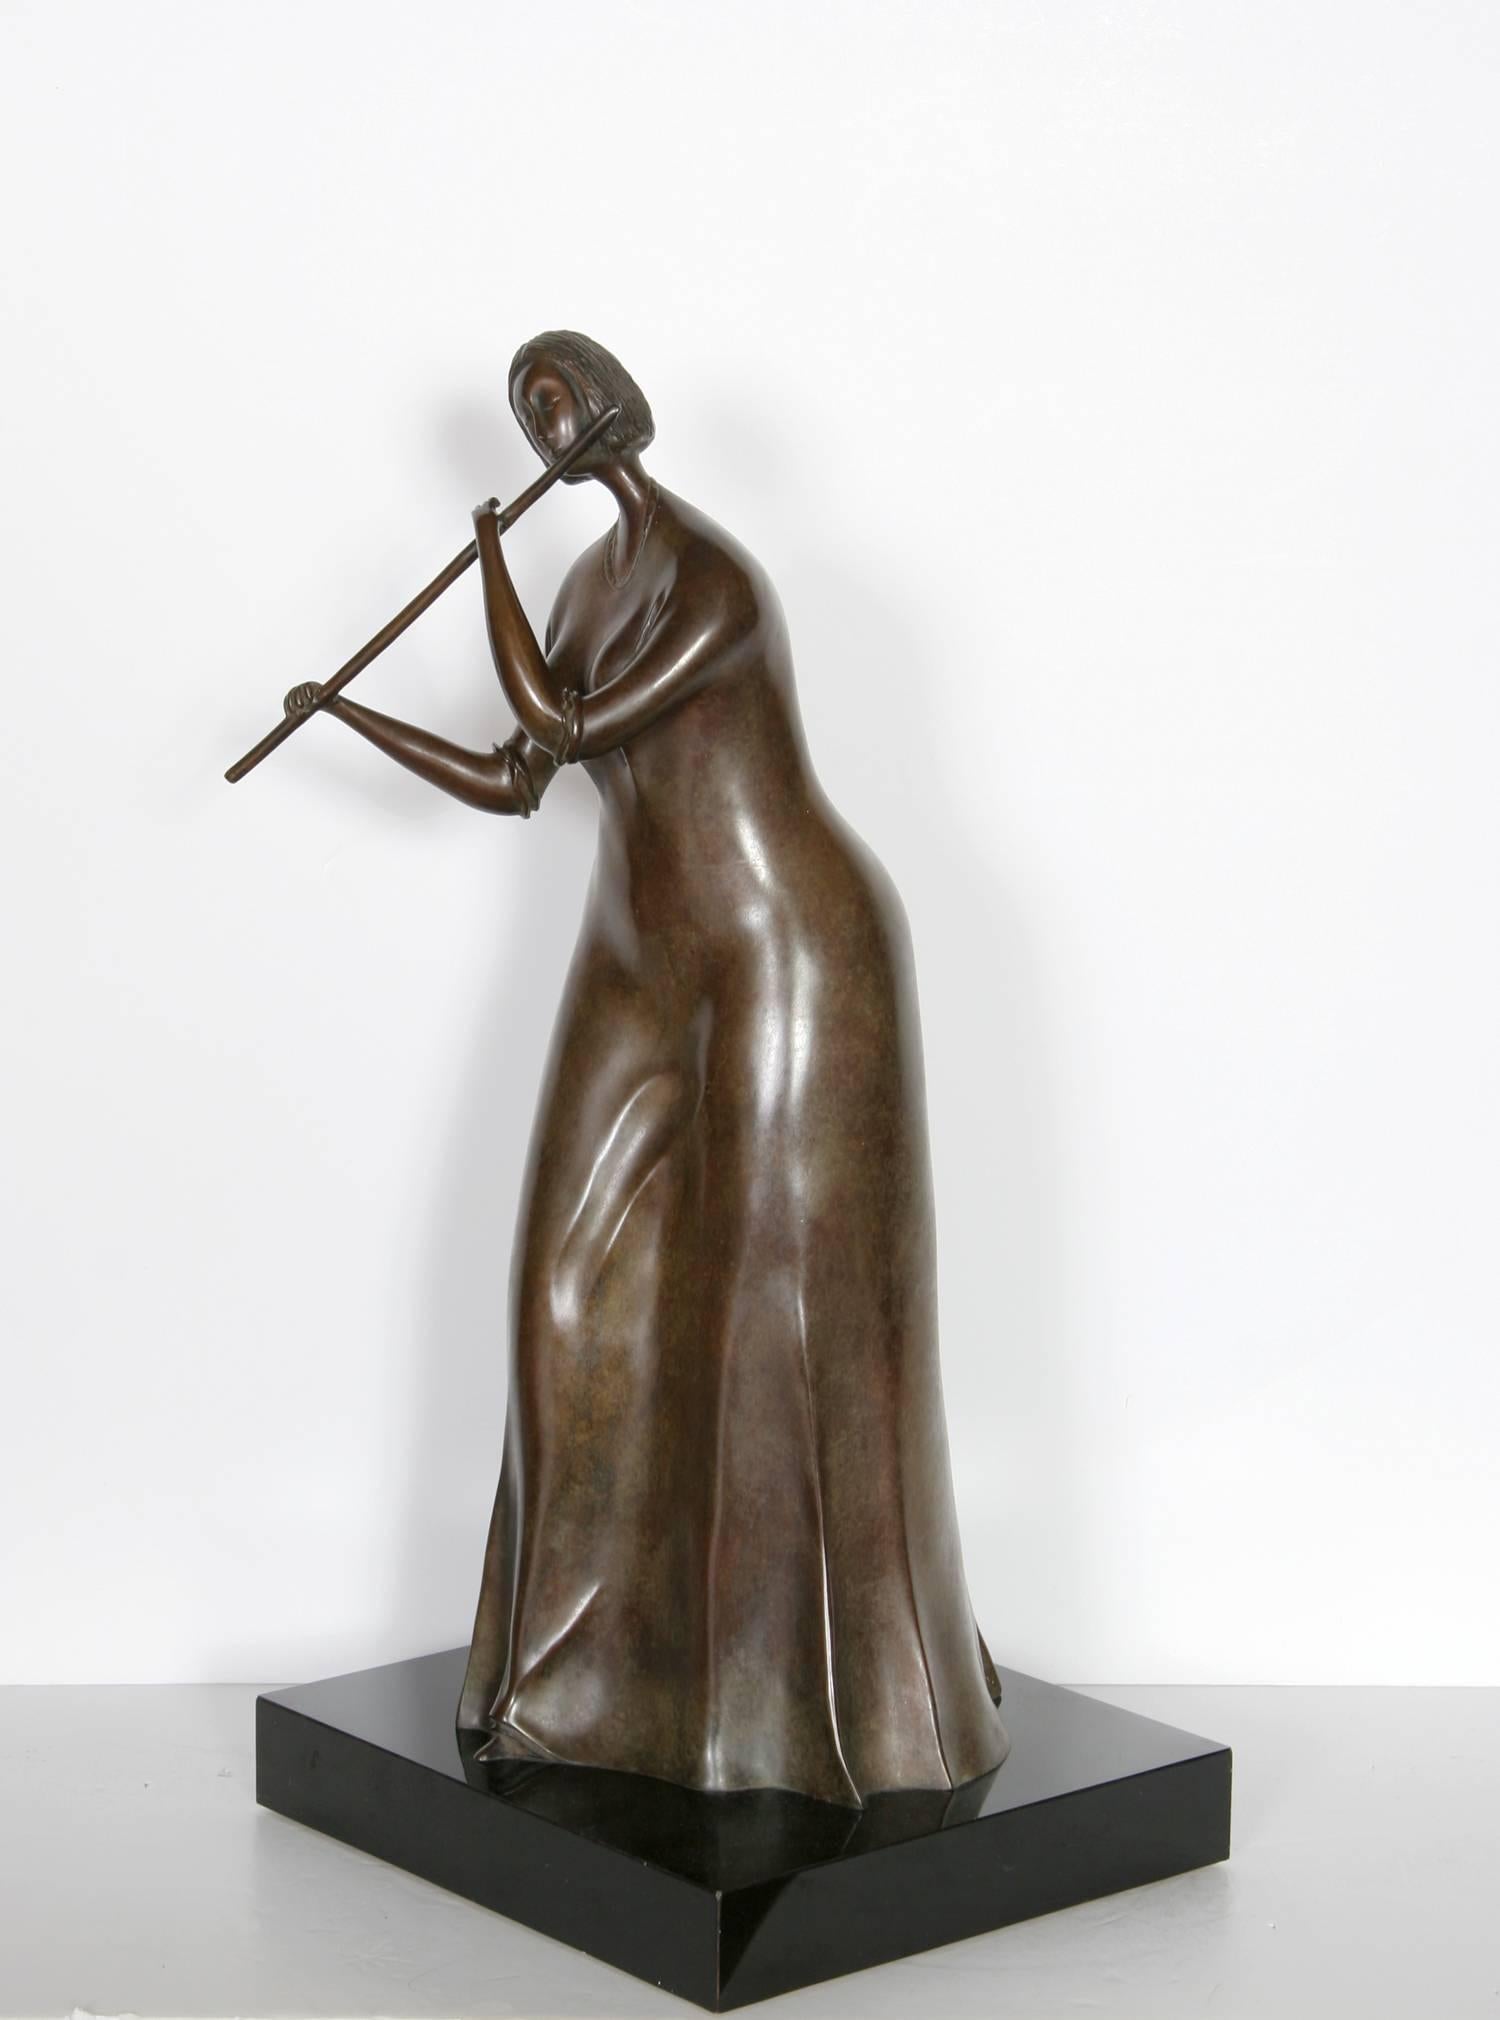 The Flautist - Gold Figurative Sculpture by Branko Bahunek